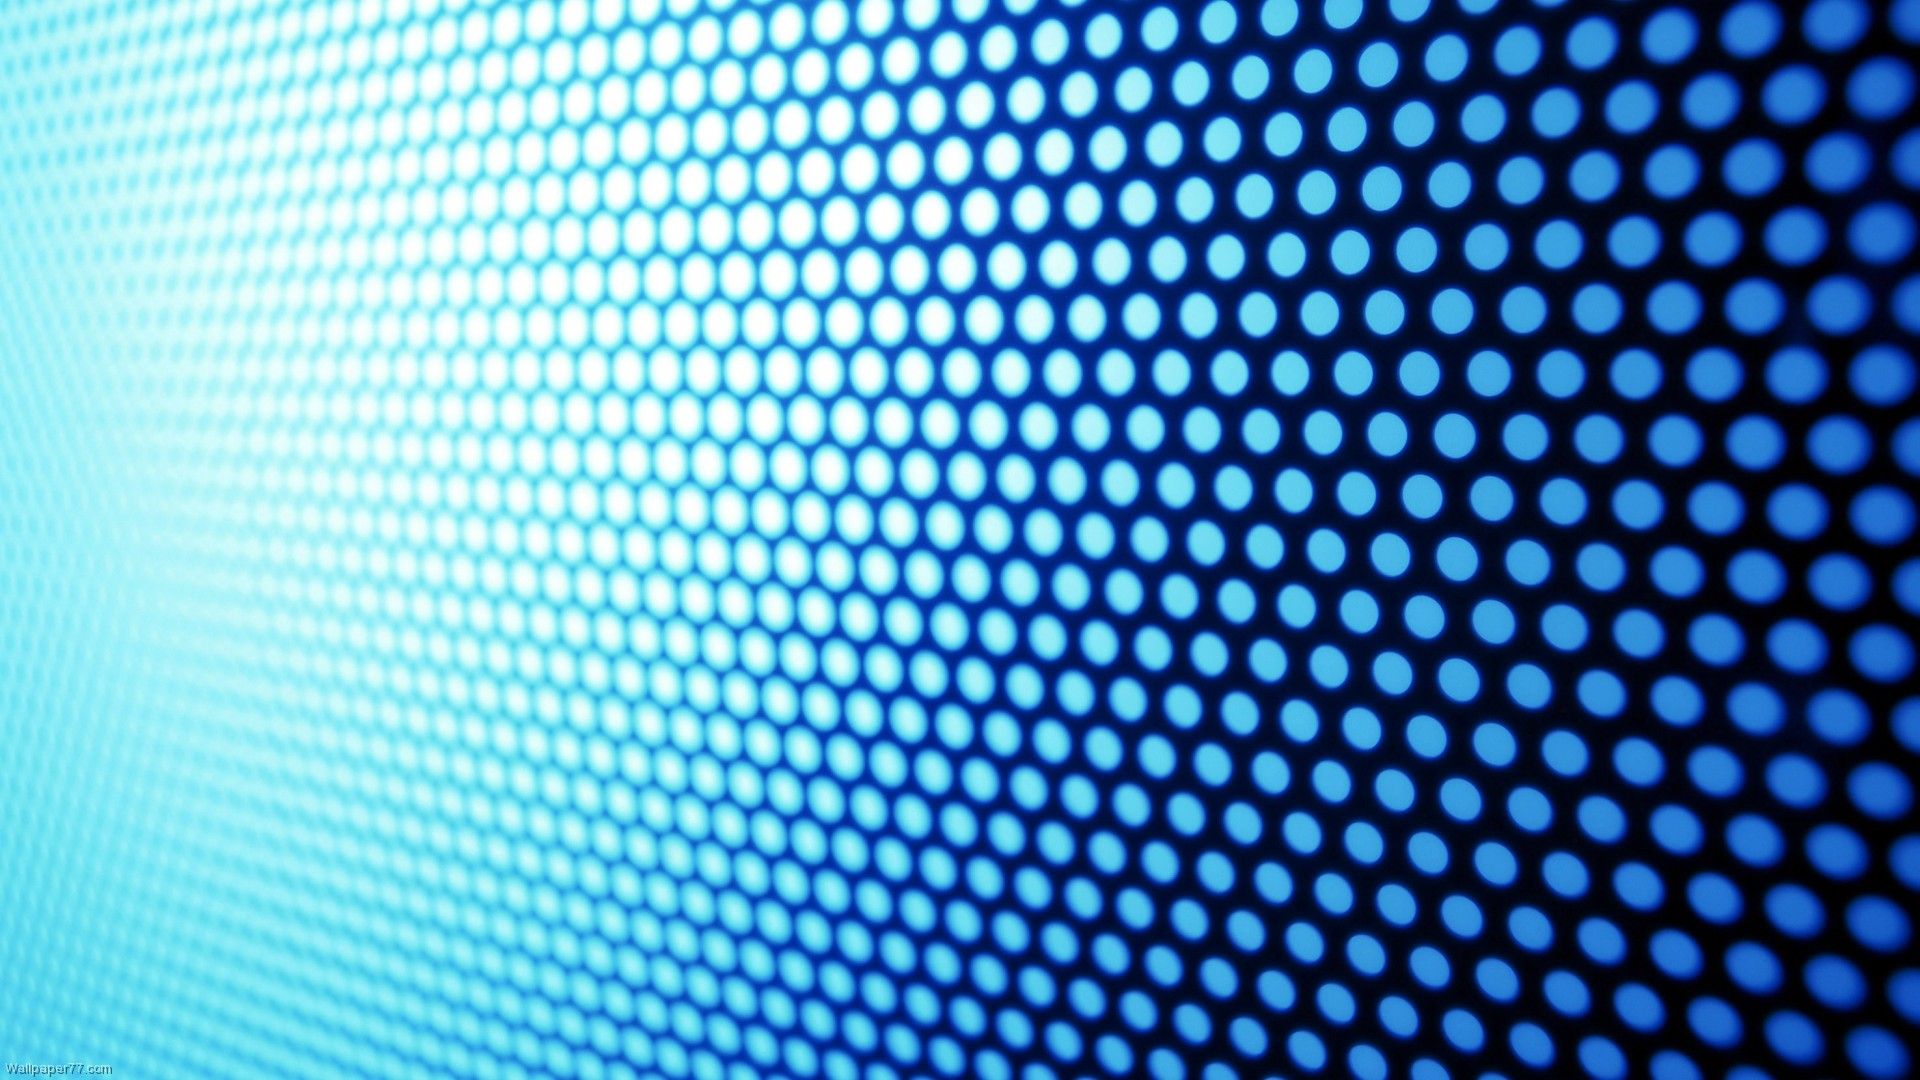 Pattern Blue Dots HD Wallpaper.Com. Carbon fiber wallpaper, Samsung wallpaper, Dots wallpaper